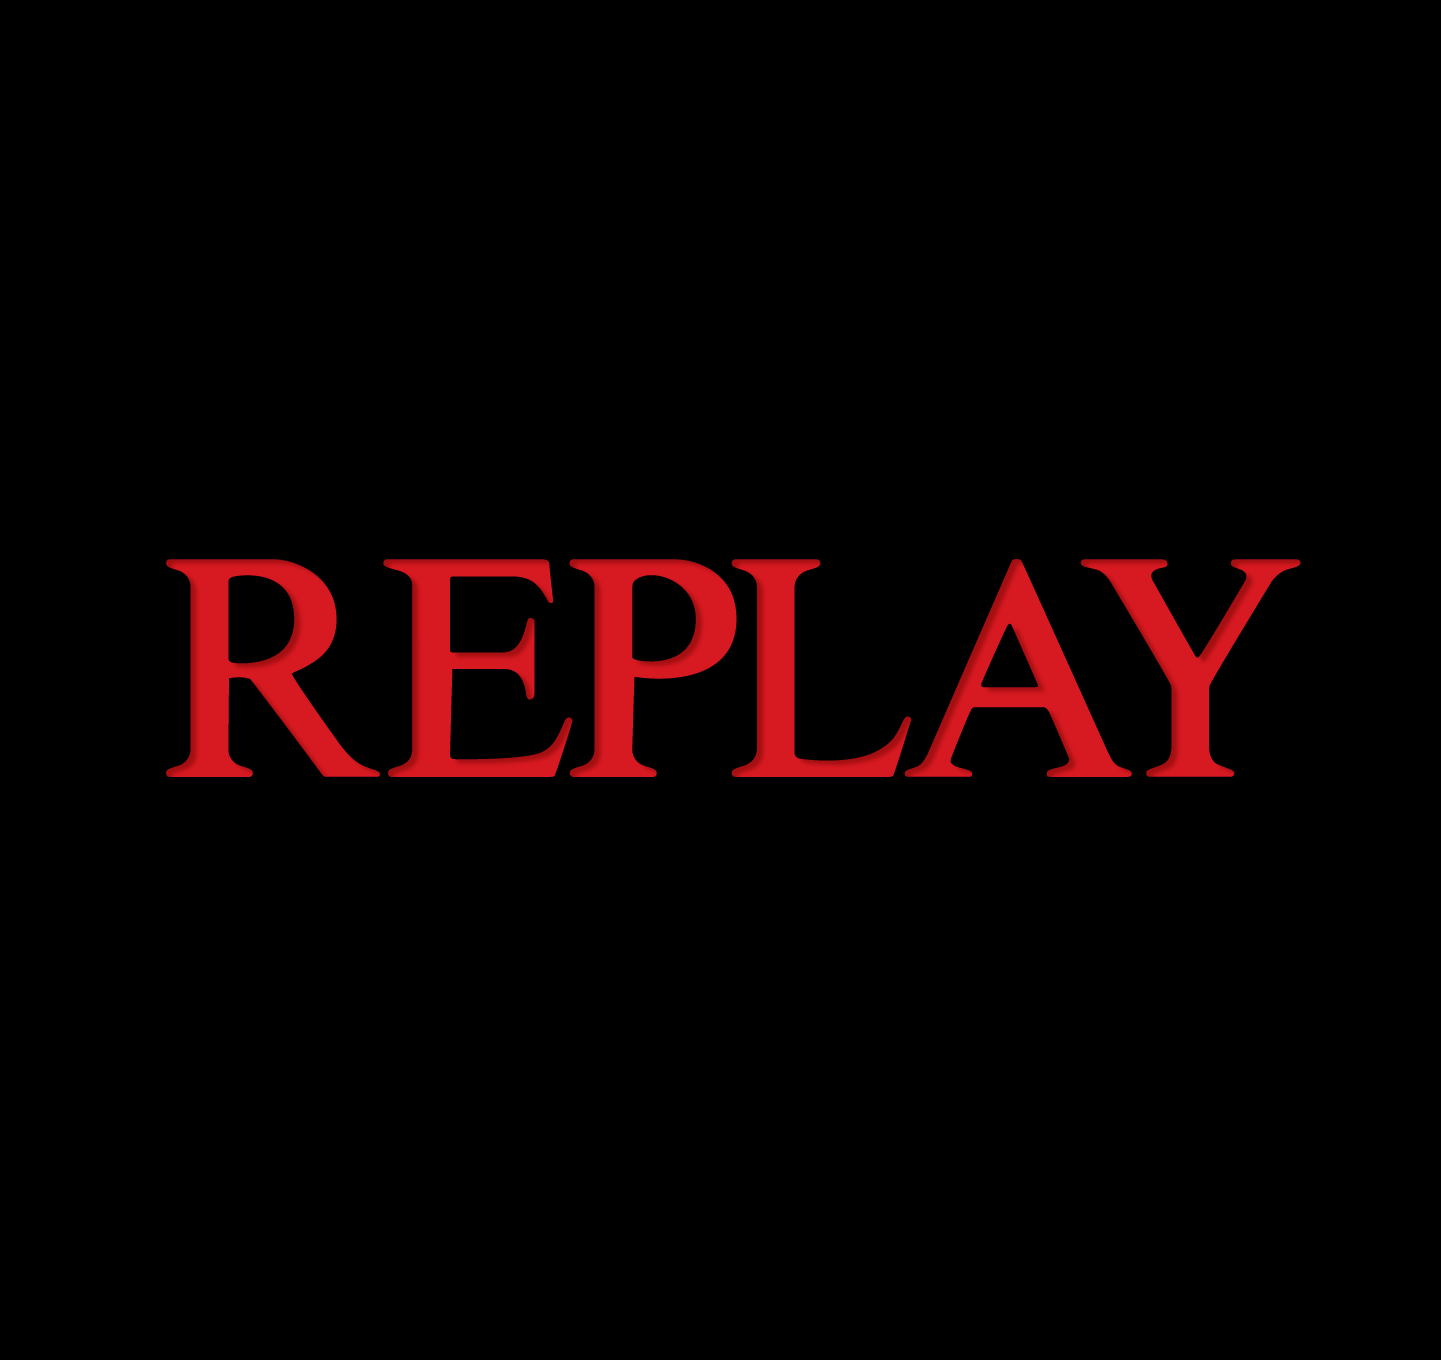 Replay Logo - File:Replay-Logo-HD.png - Wikimedia Commons